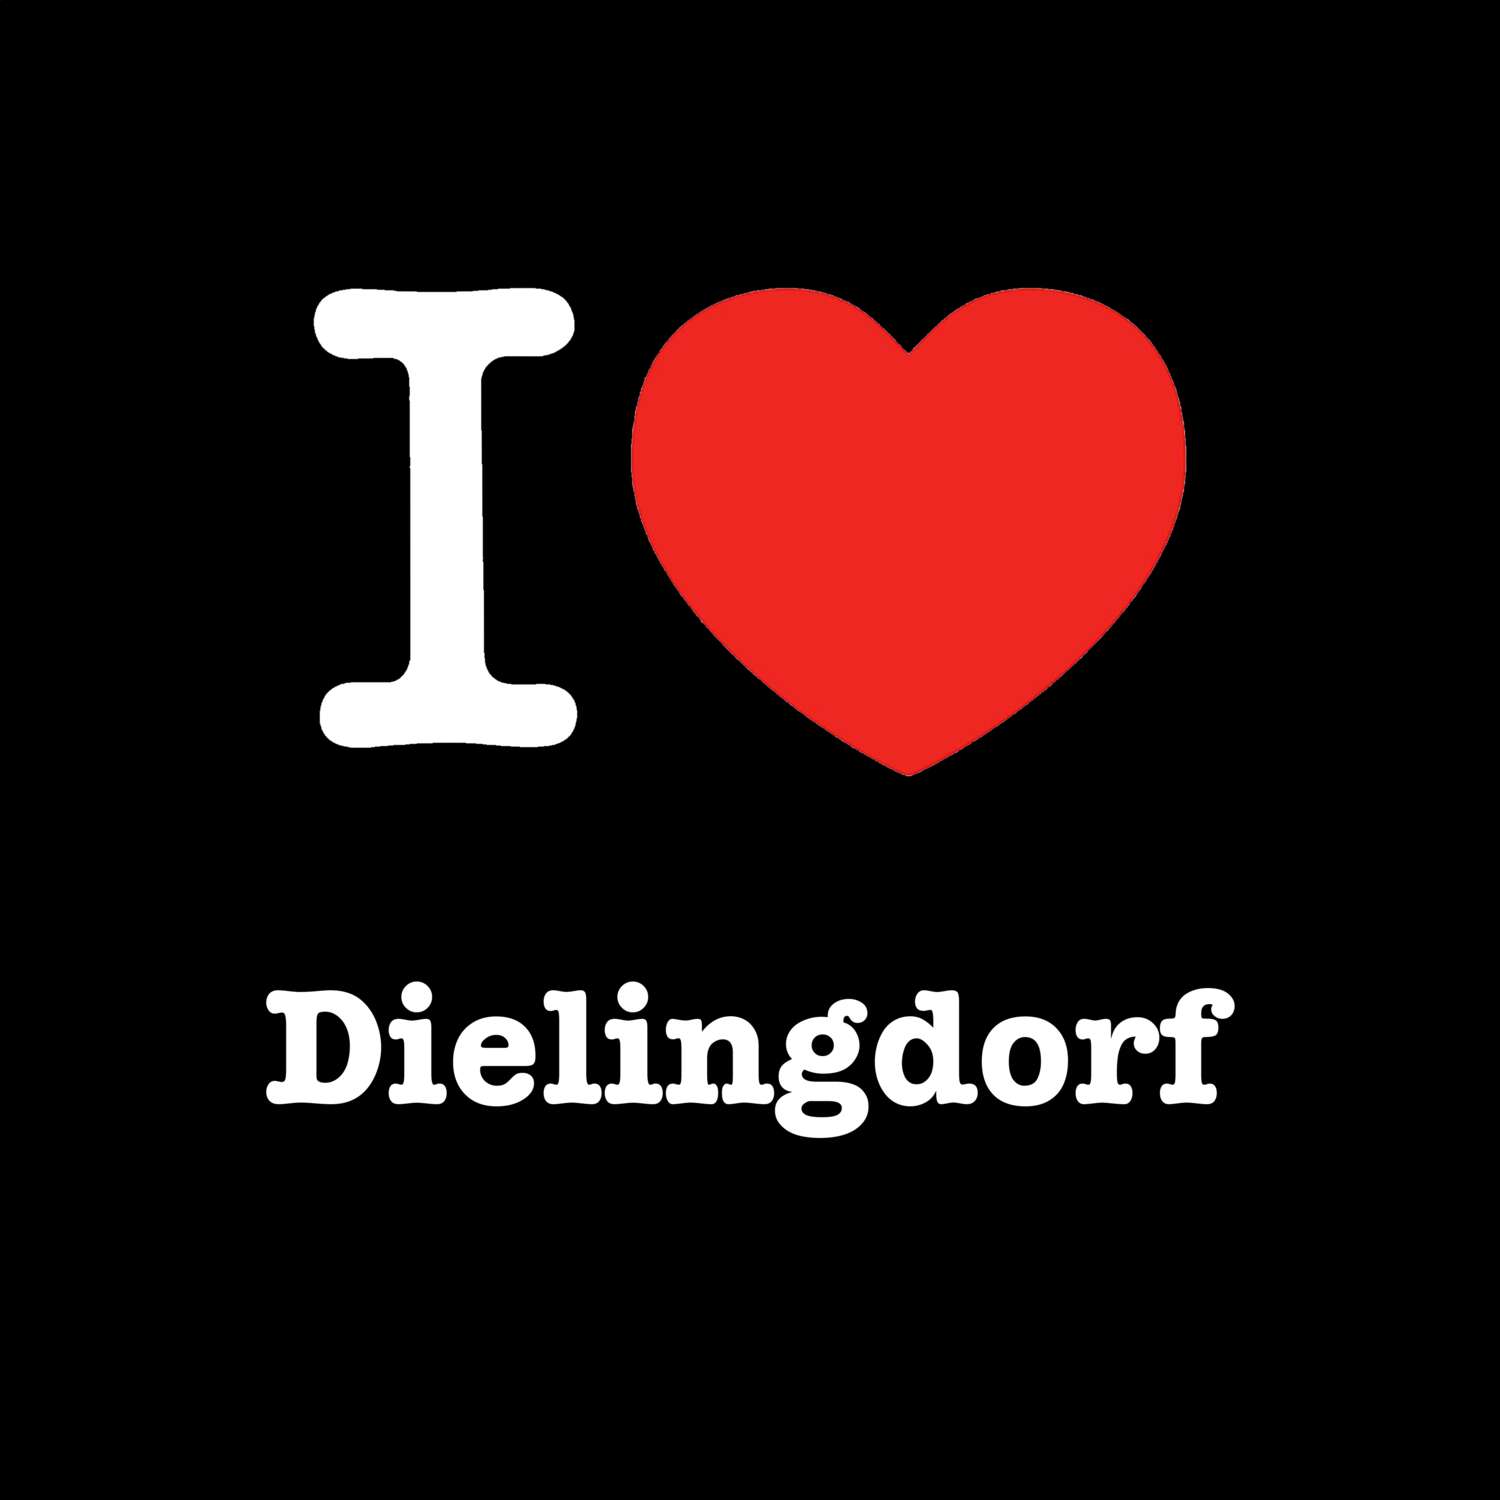 Dielingdorf T-Shirt »I love«